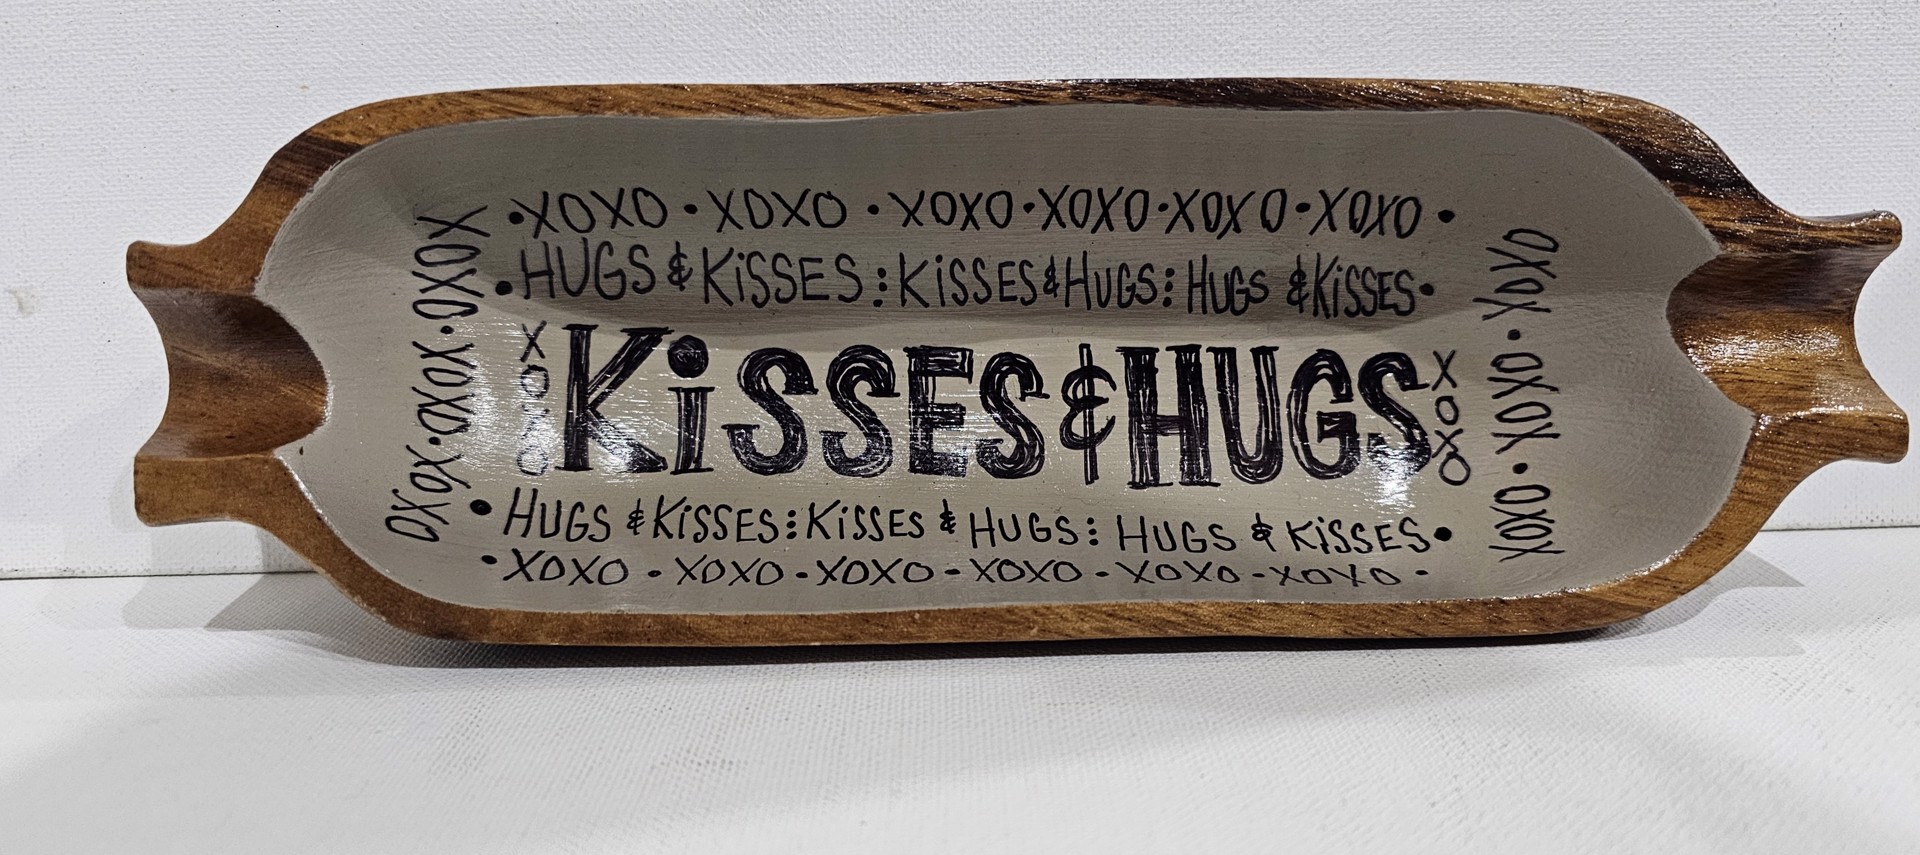 Kisses and Hugs by Terra Paulsen Chmielewski